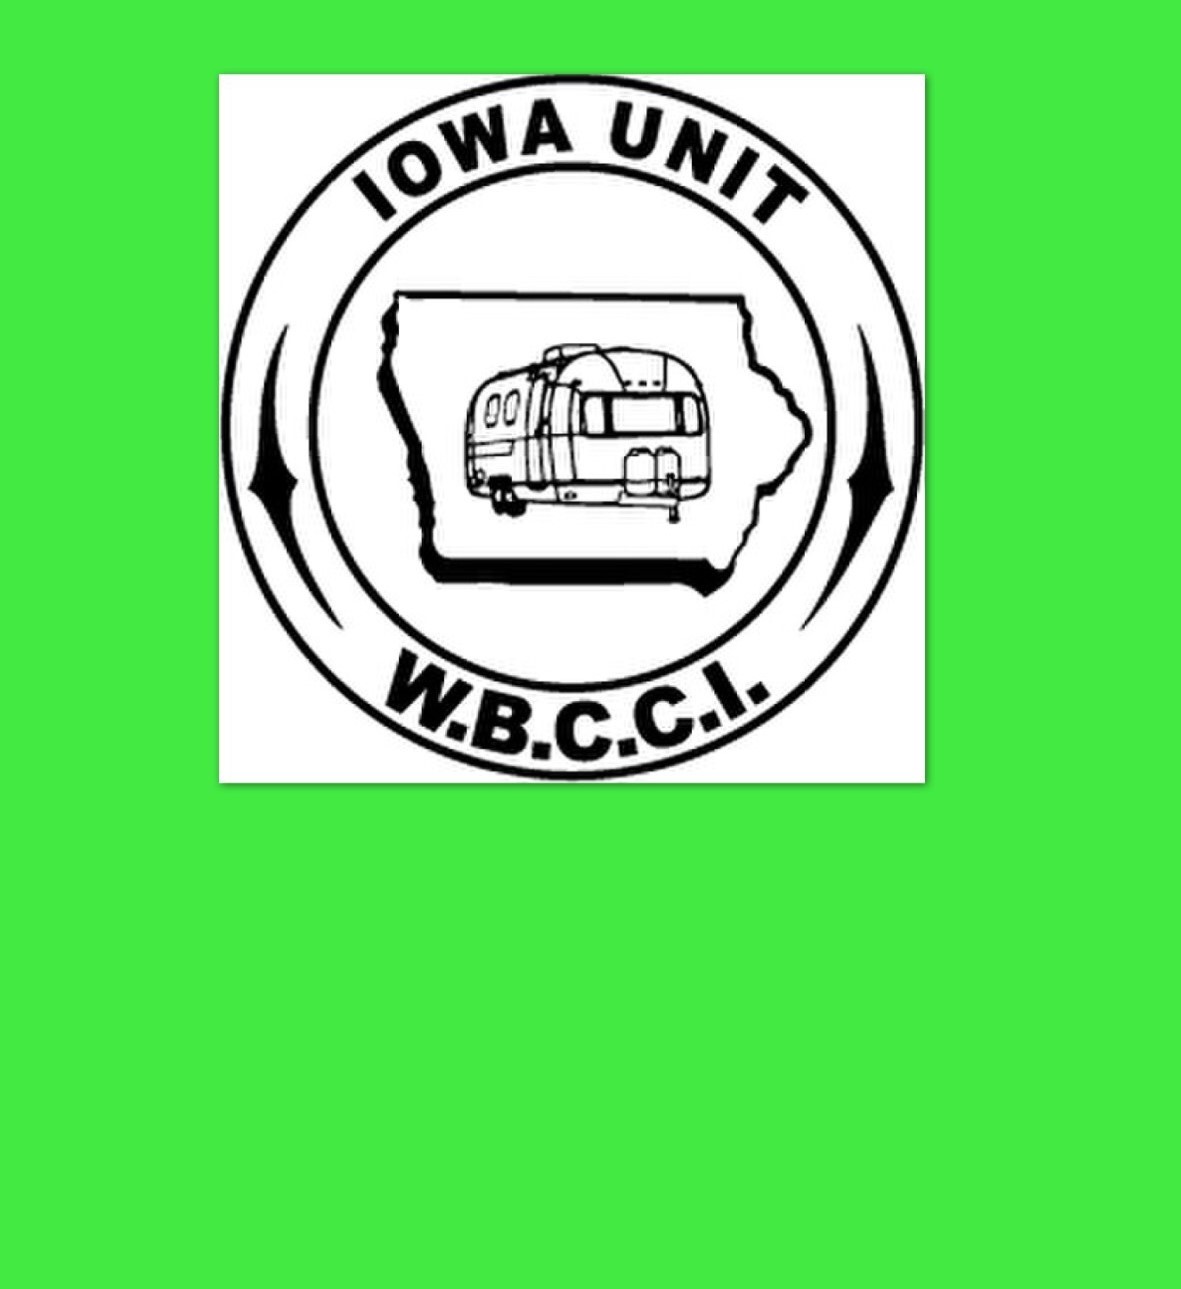 Iowa Unit Logo with Color (5)